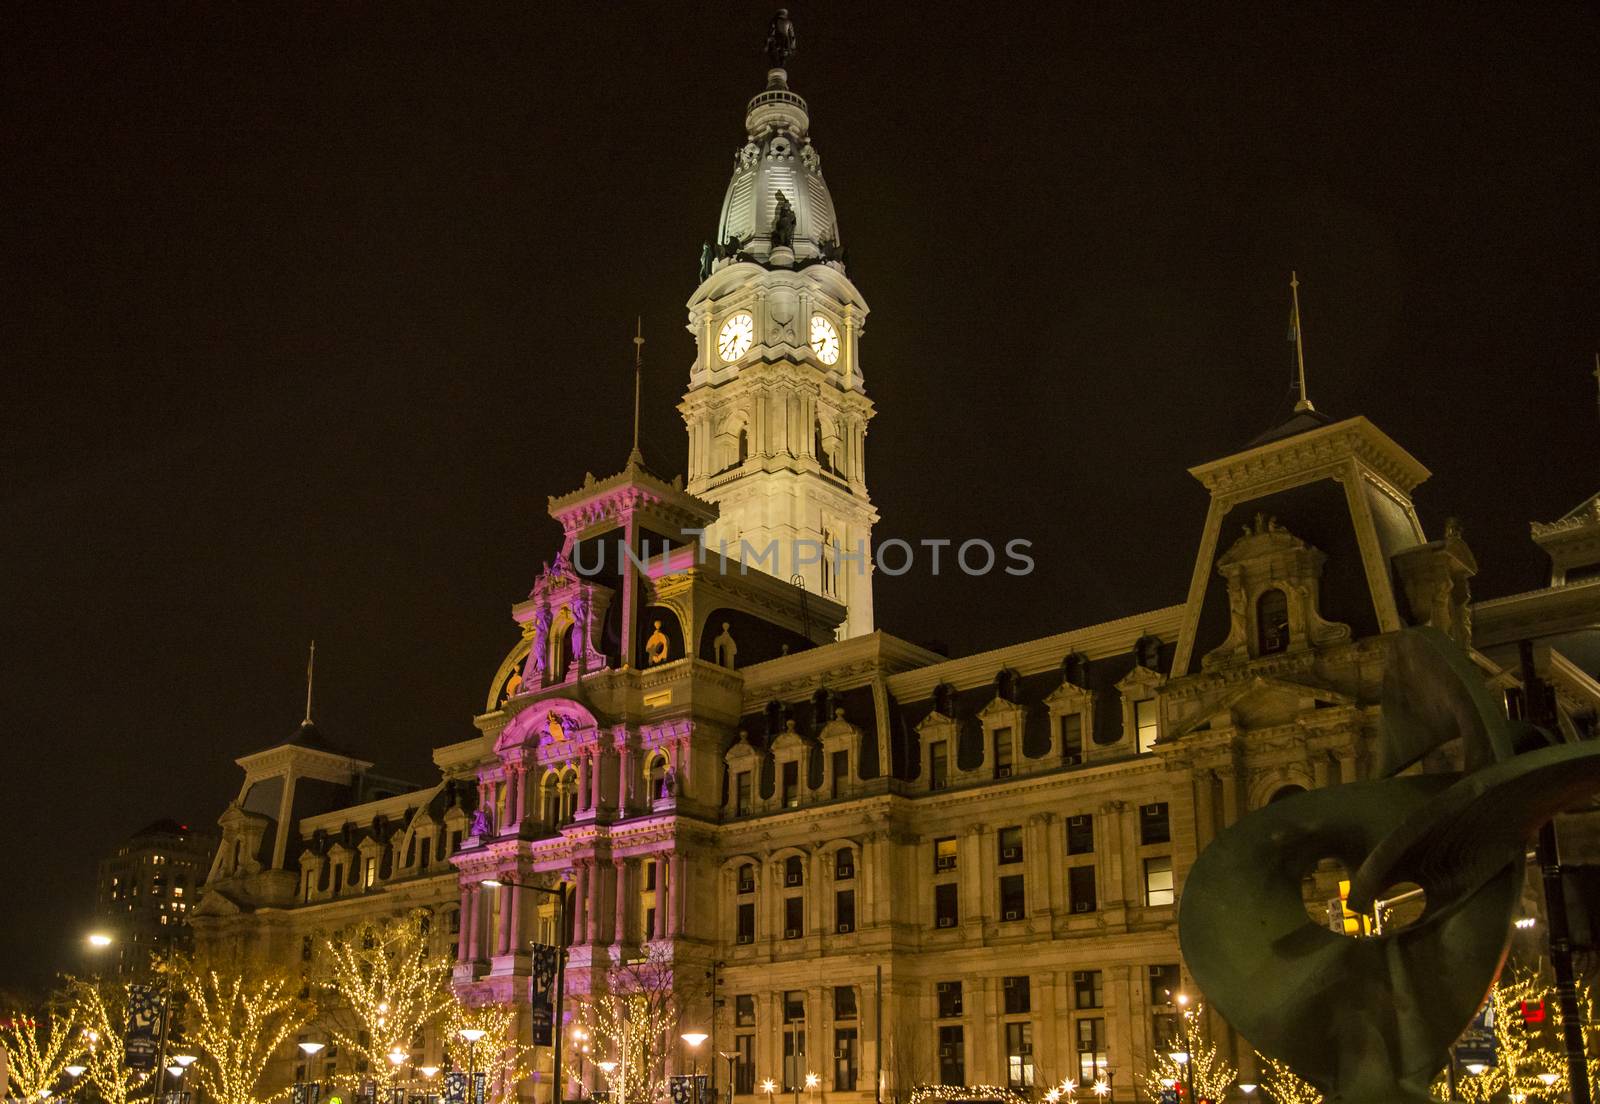 Philadelphia city hall by night, Pennsylvania USA by edella